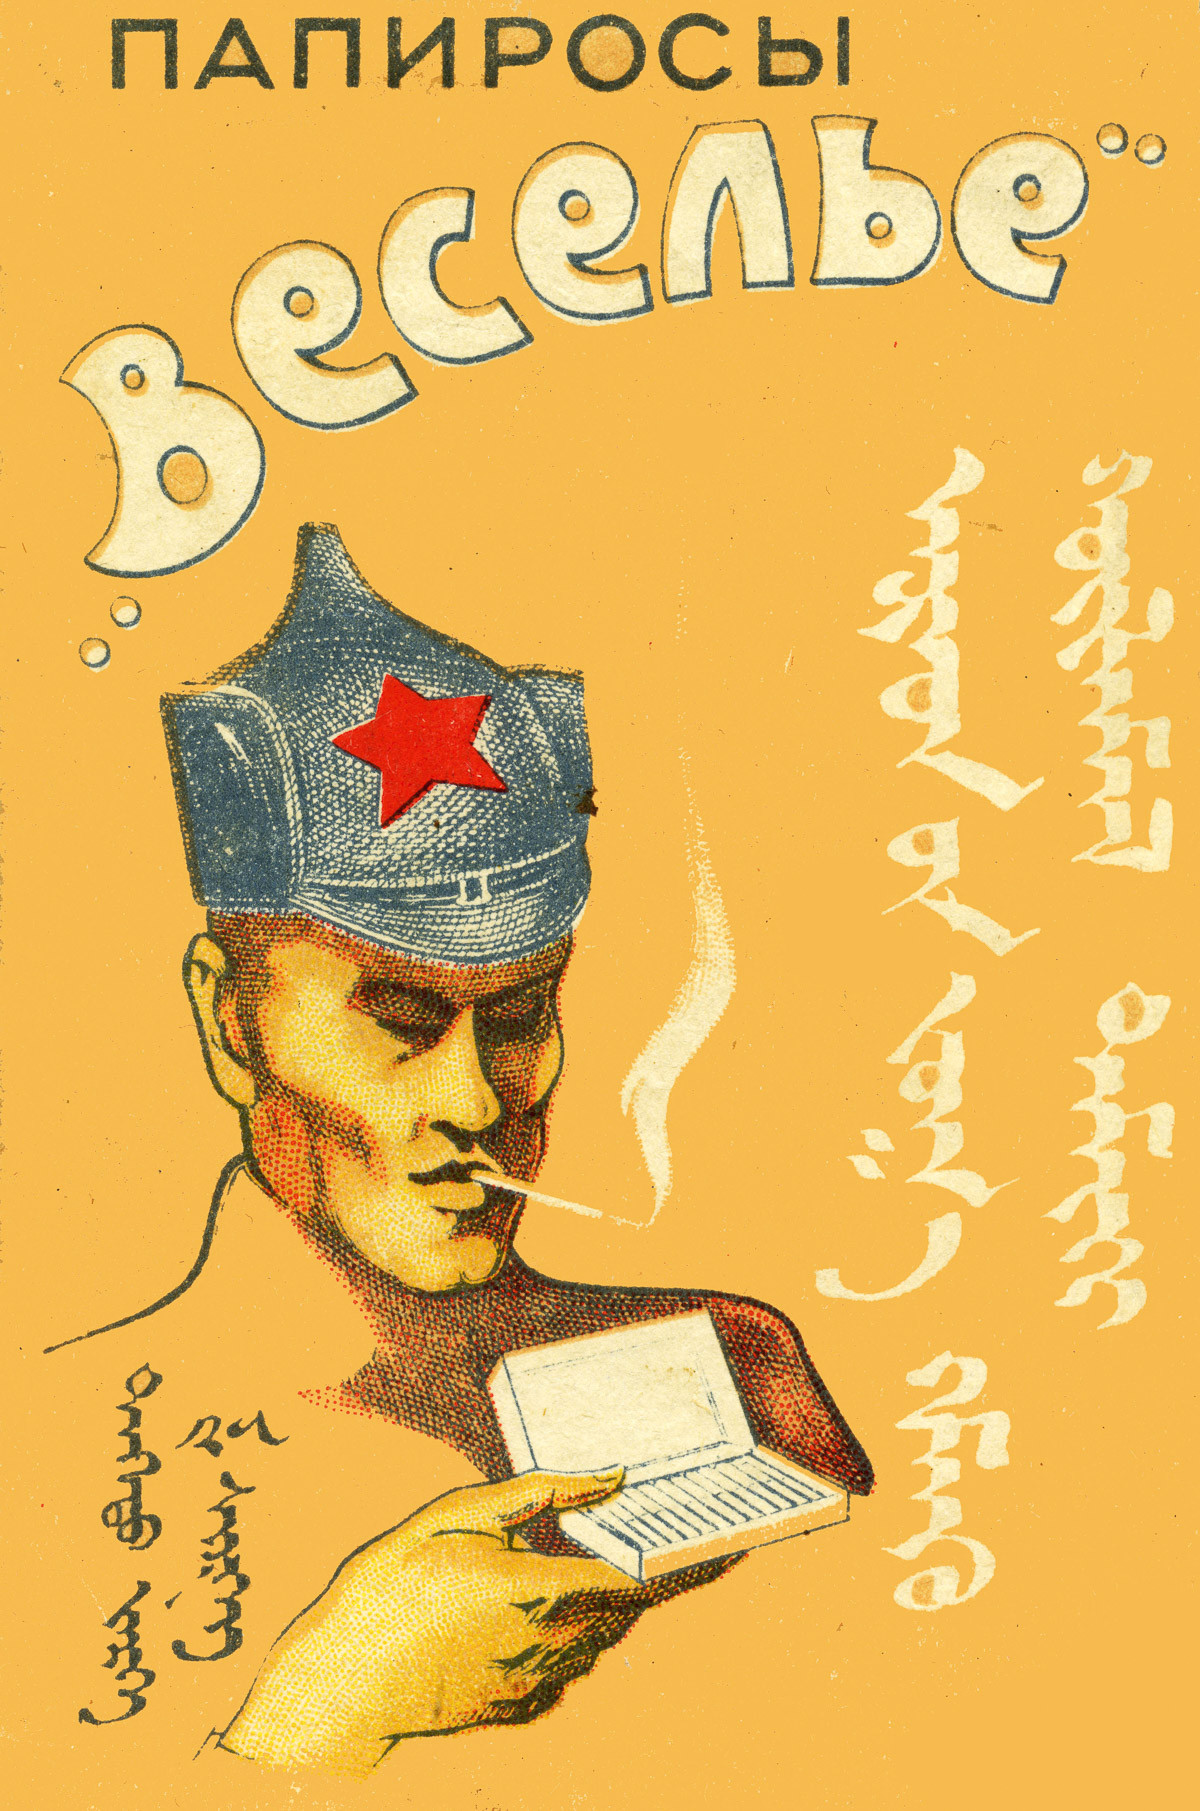 Сигареты плакаты. Плакат папирос 20-х годов СССР. Рекламные плакаты 20х годов. Советские рекламные плакаты. Советская реклама в 1920-е годы.